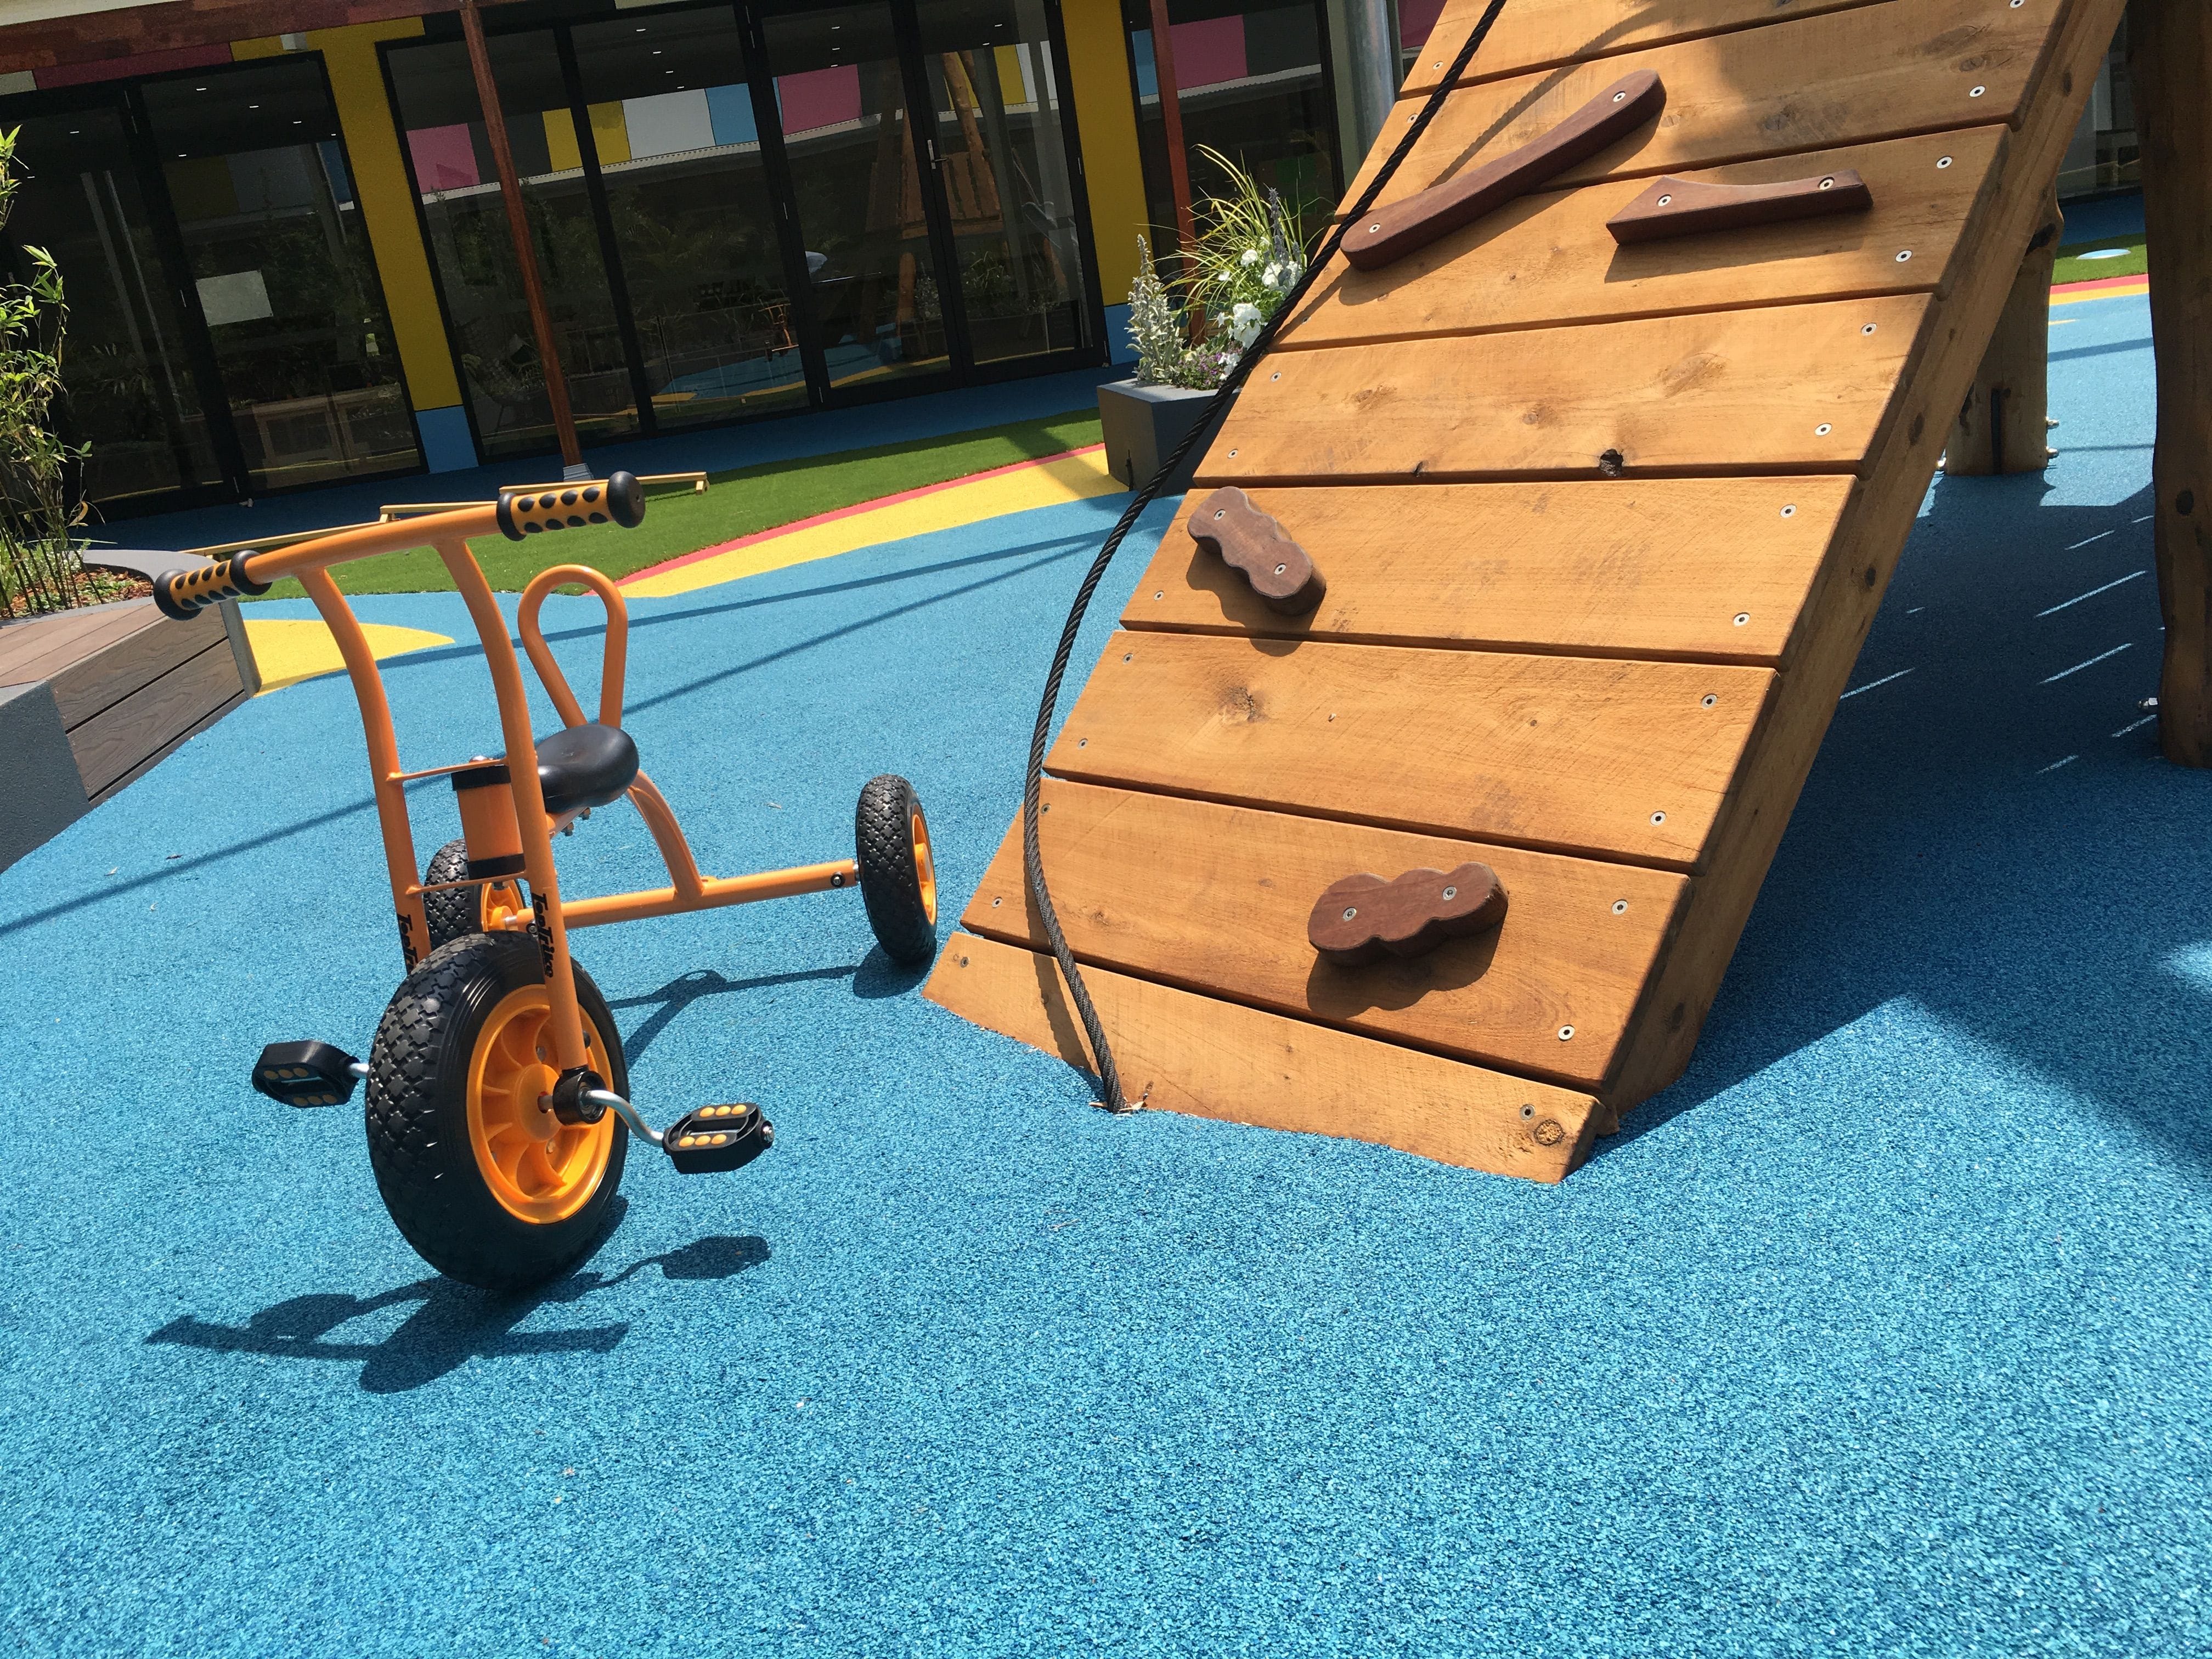 Complete Playgrounds - Little Unicorns Childcare Image -5dd737d0e6a79